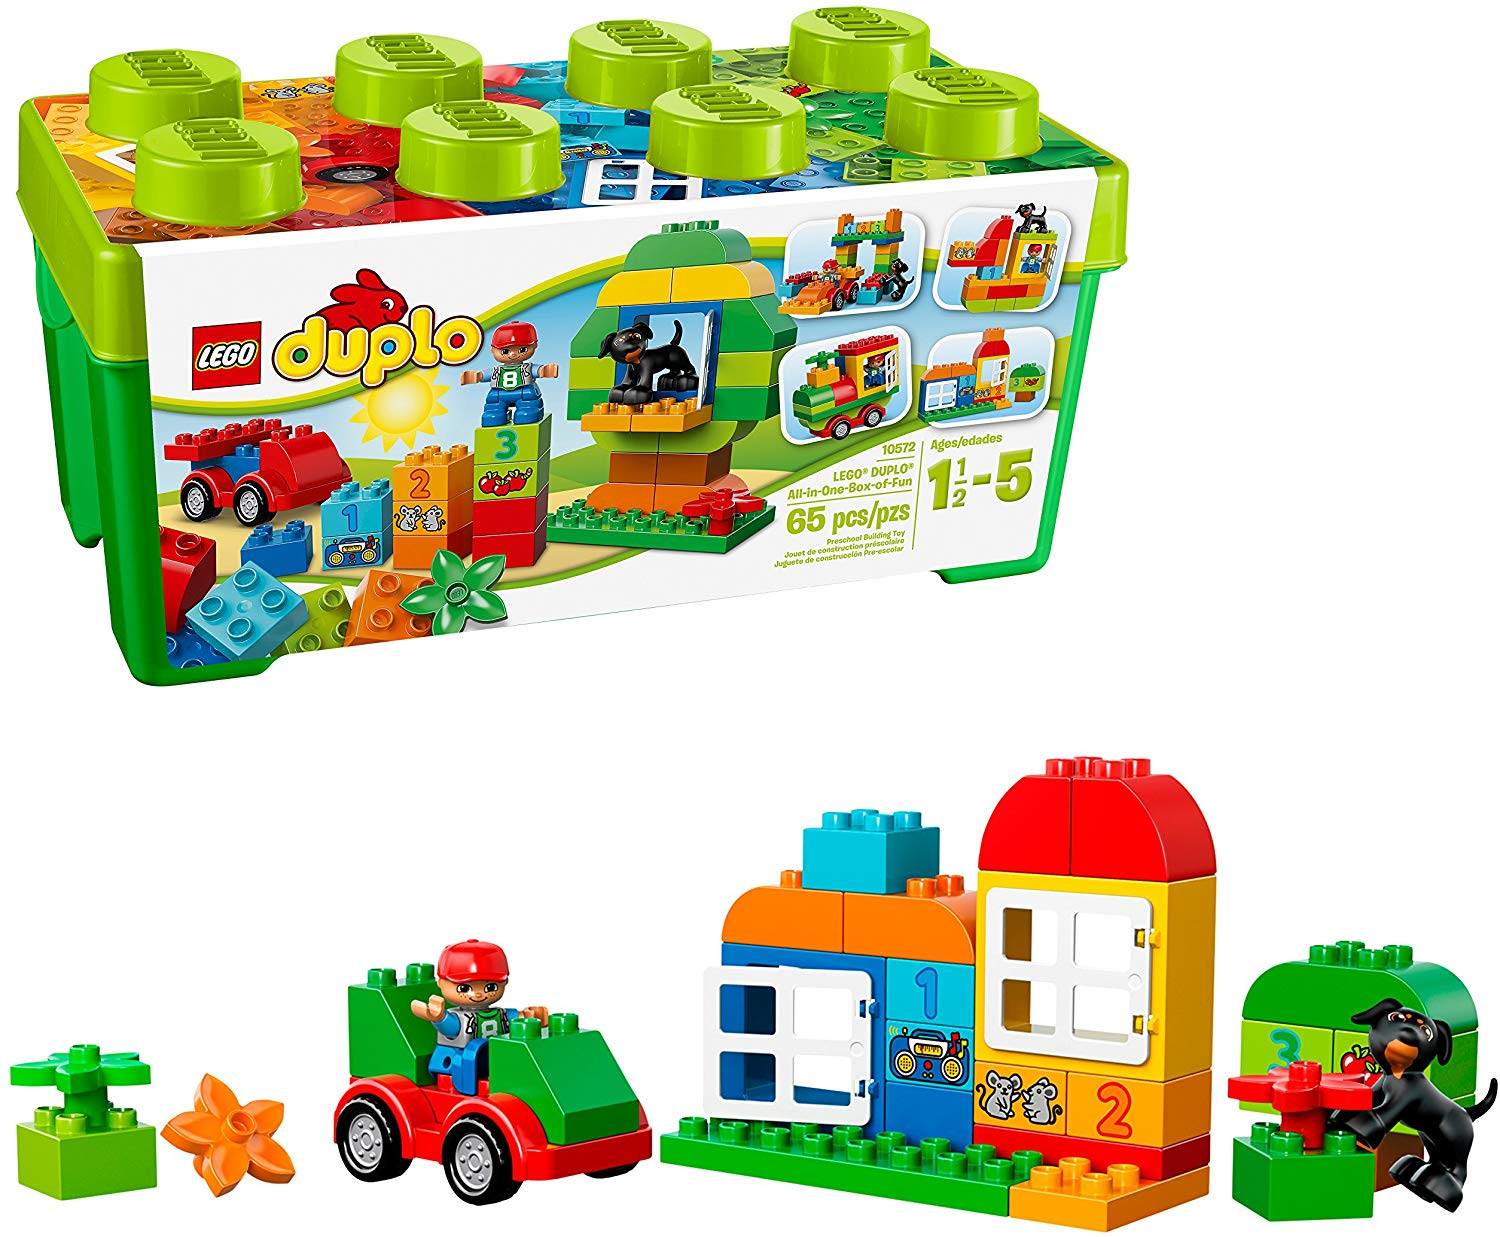 Lego Duplo All-in-One-Box-of-Fun 